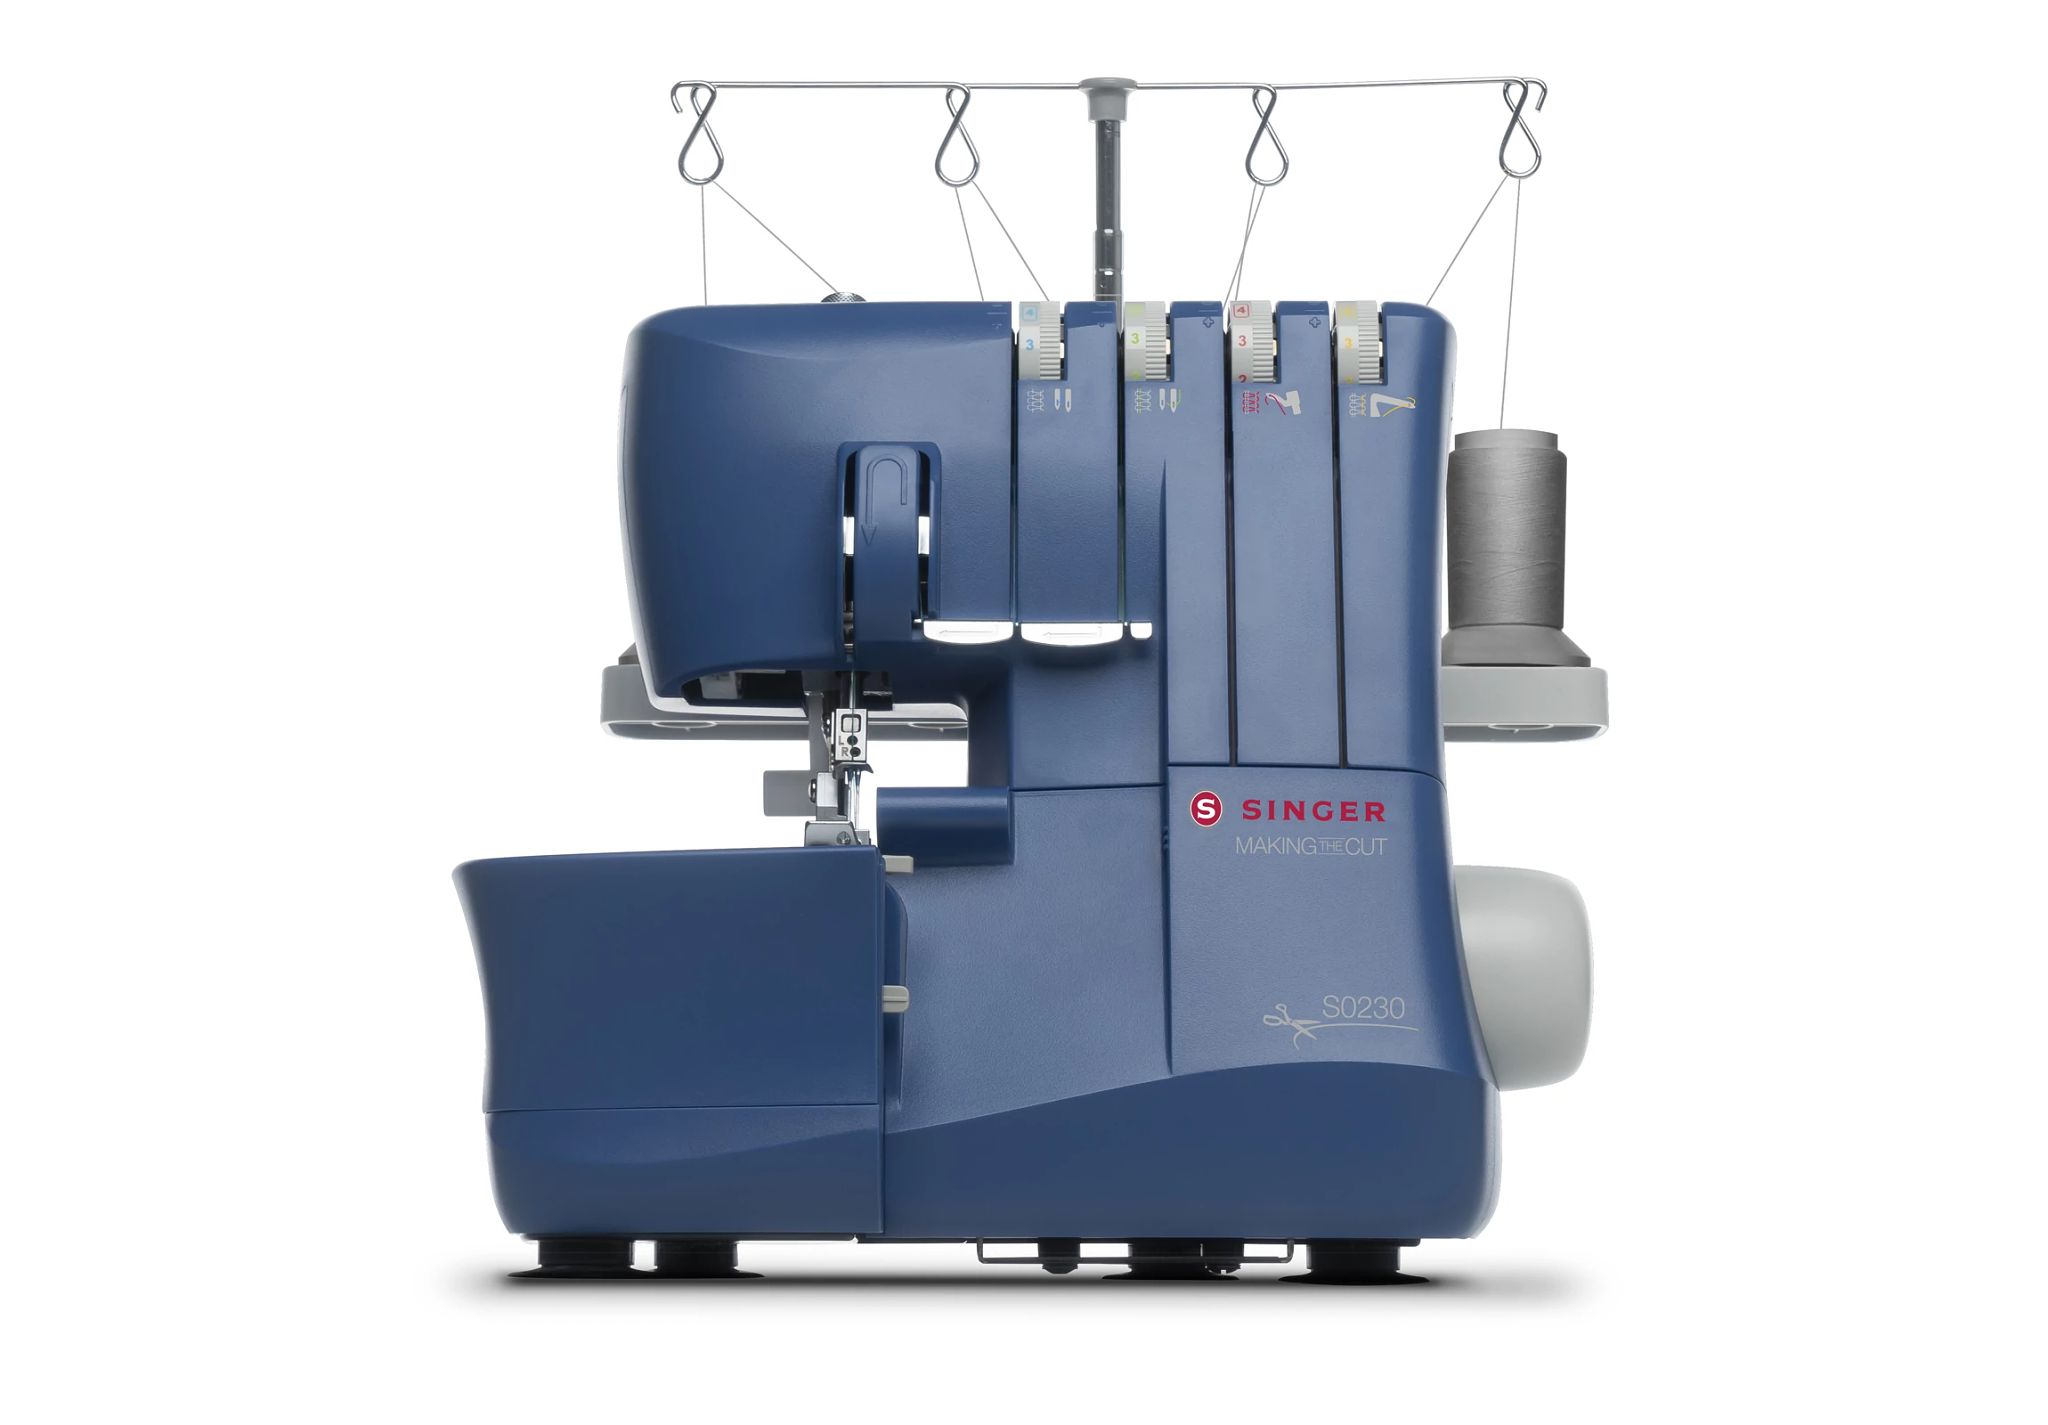 Singer M3330 Making The Cut Sewing Machine